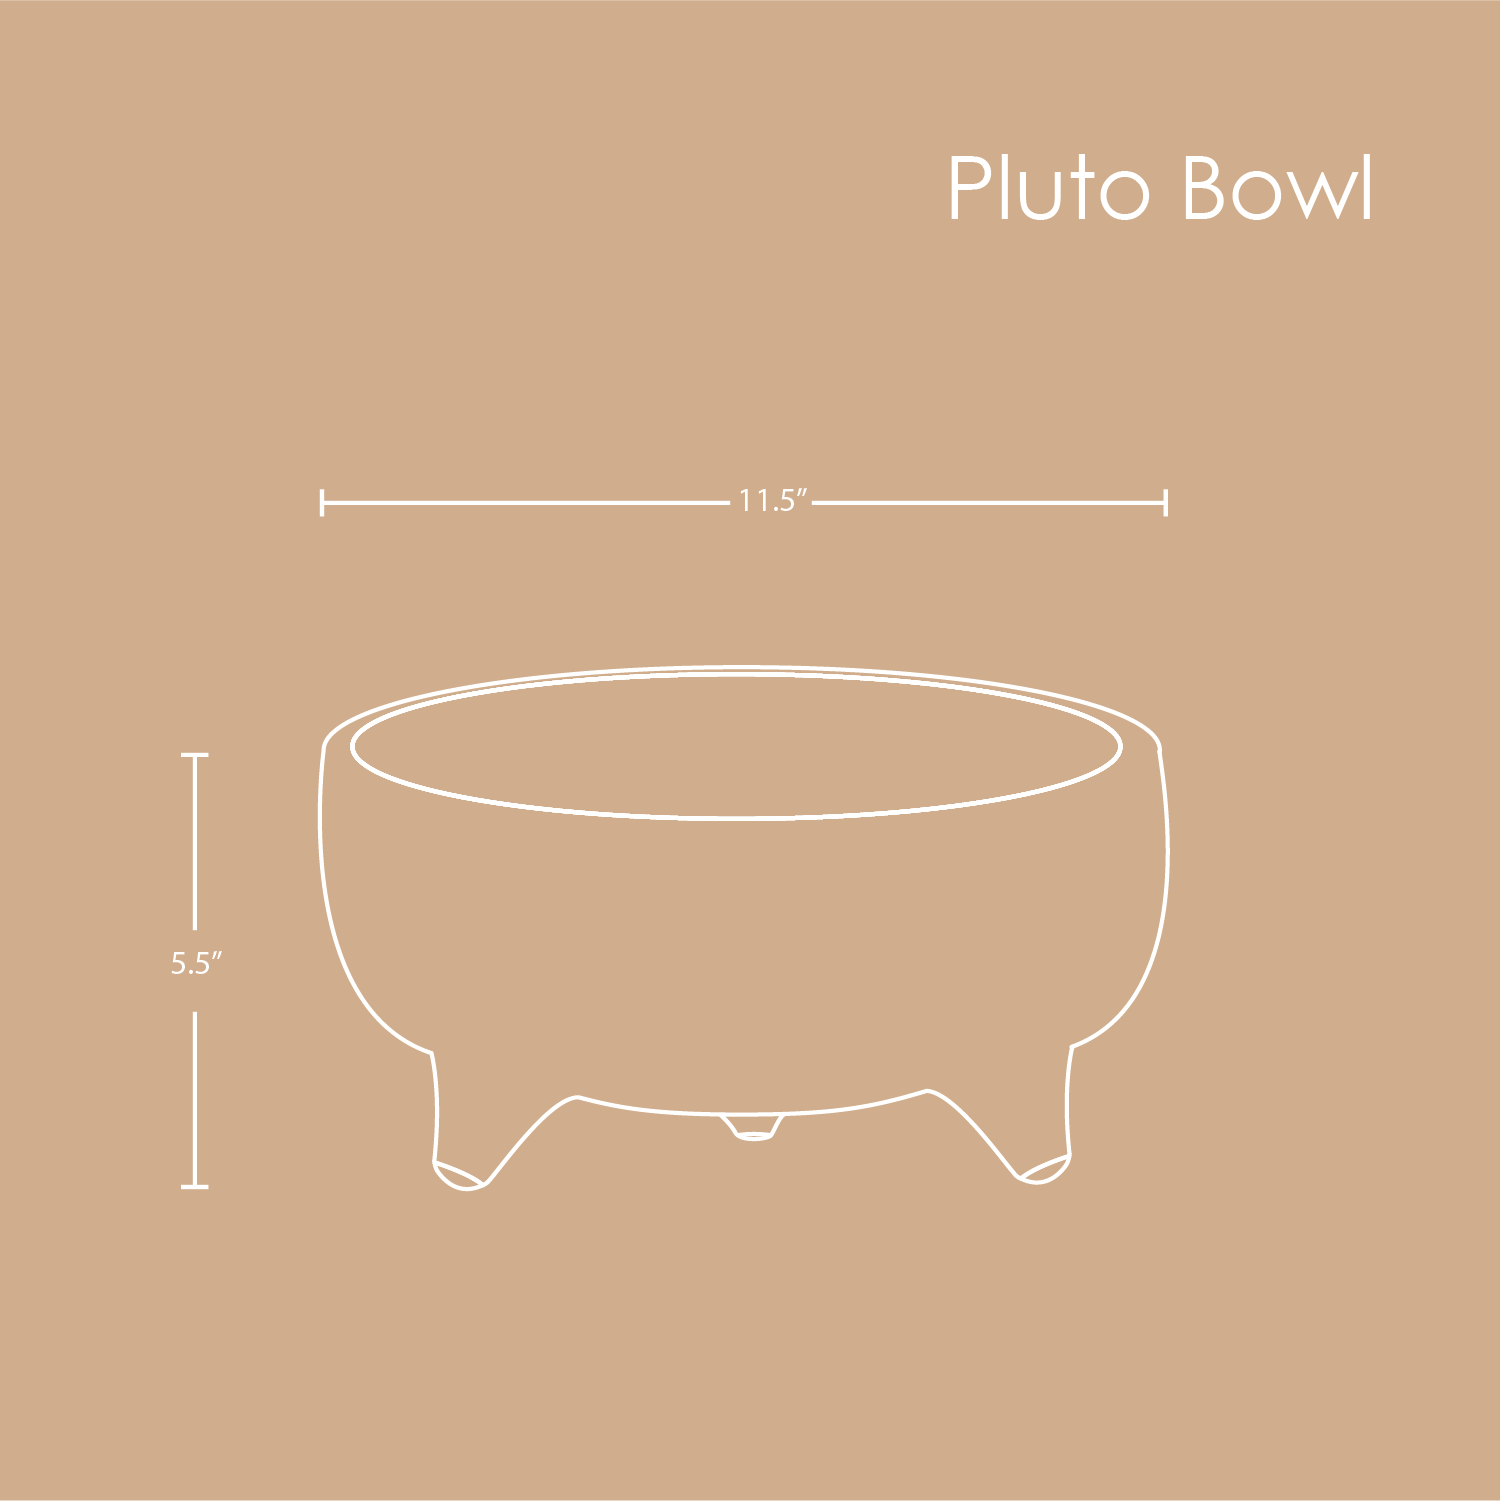 Pluto Bowl